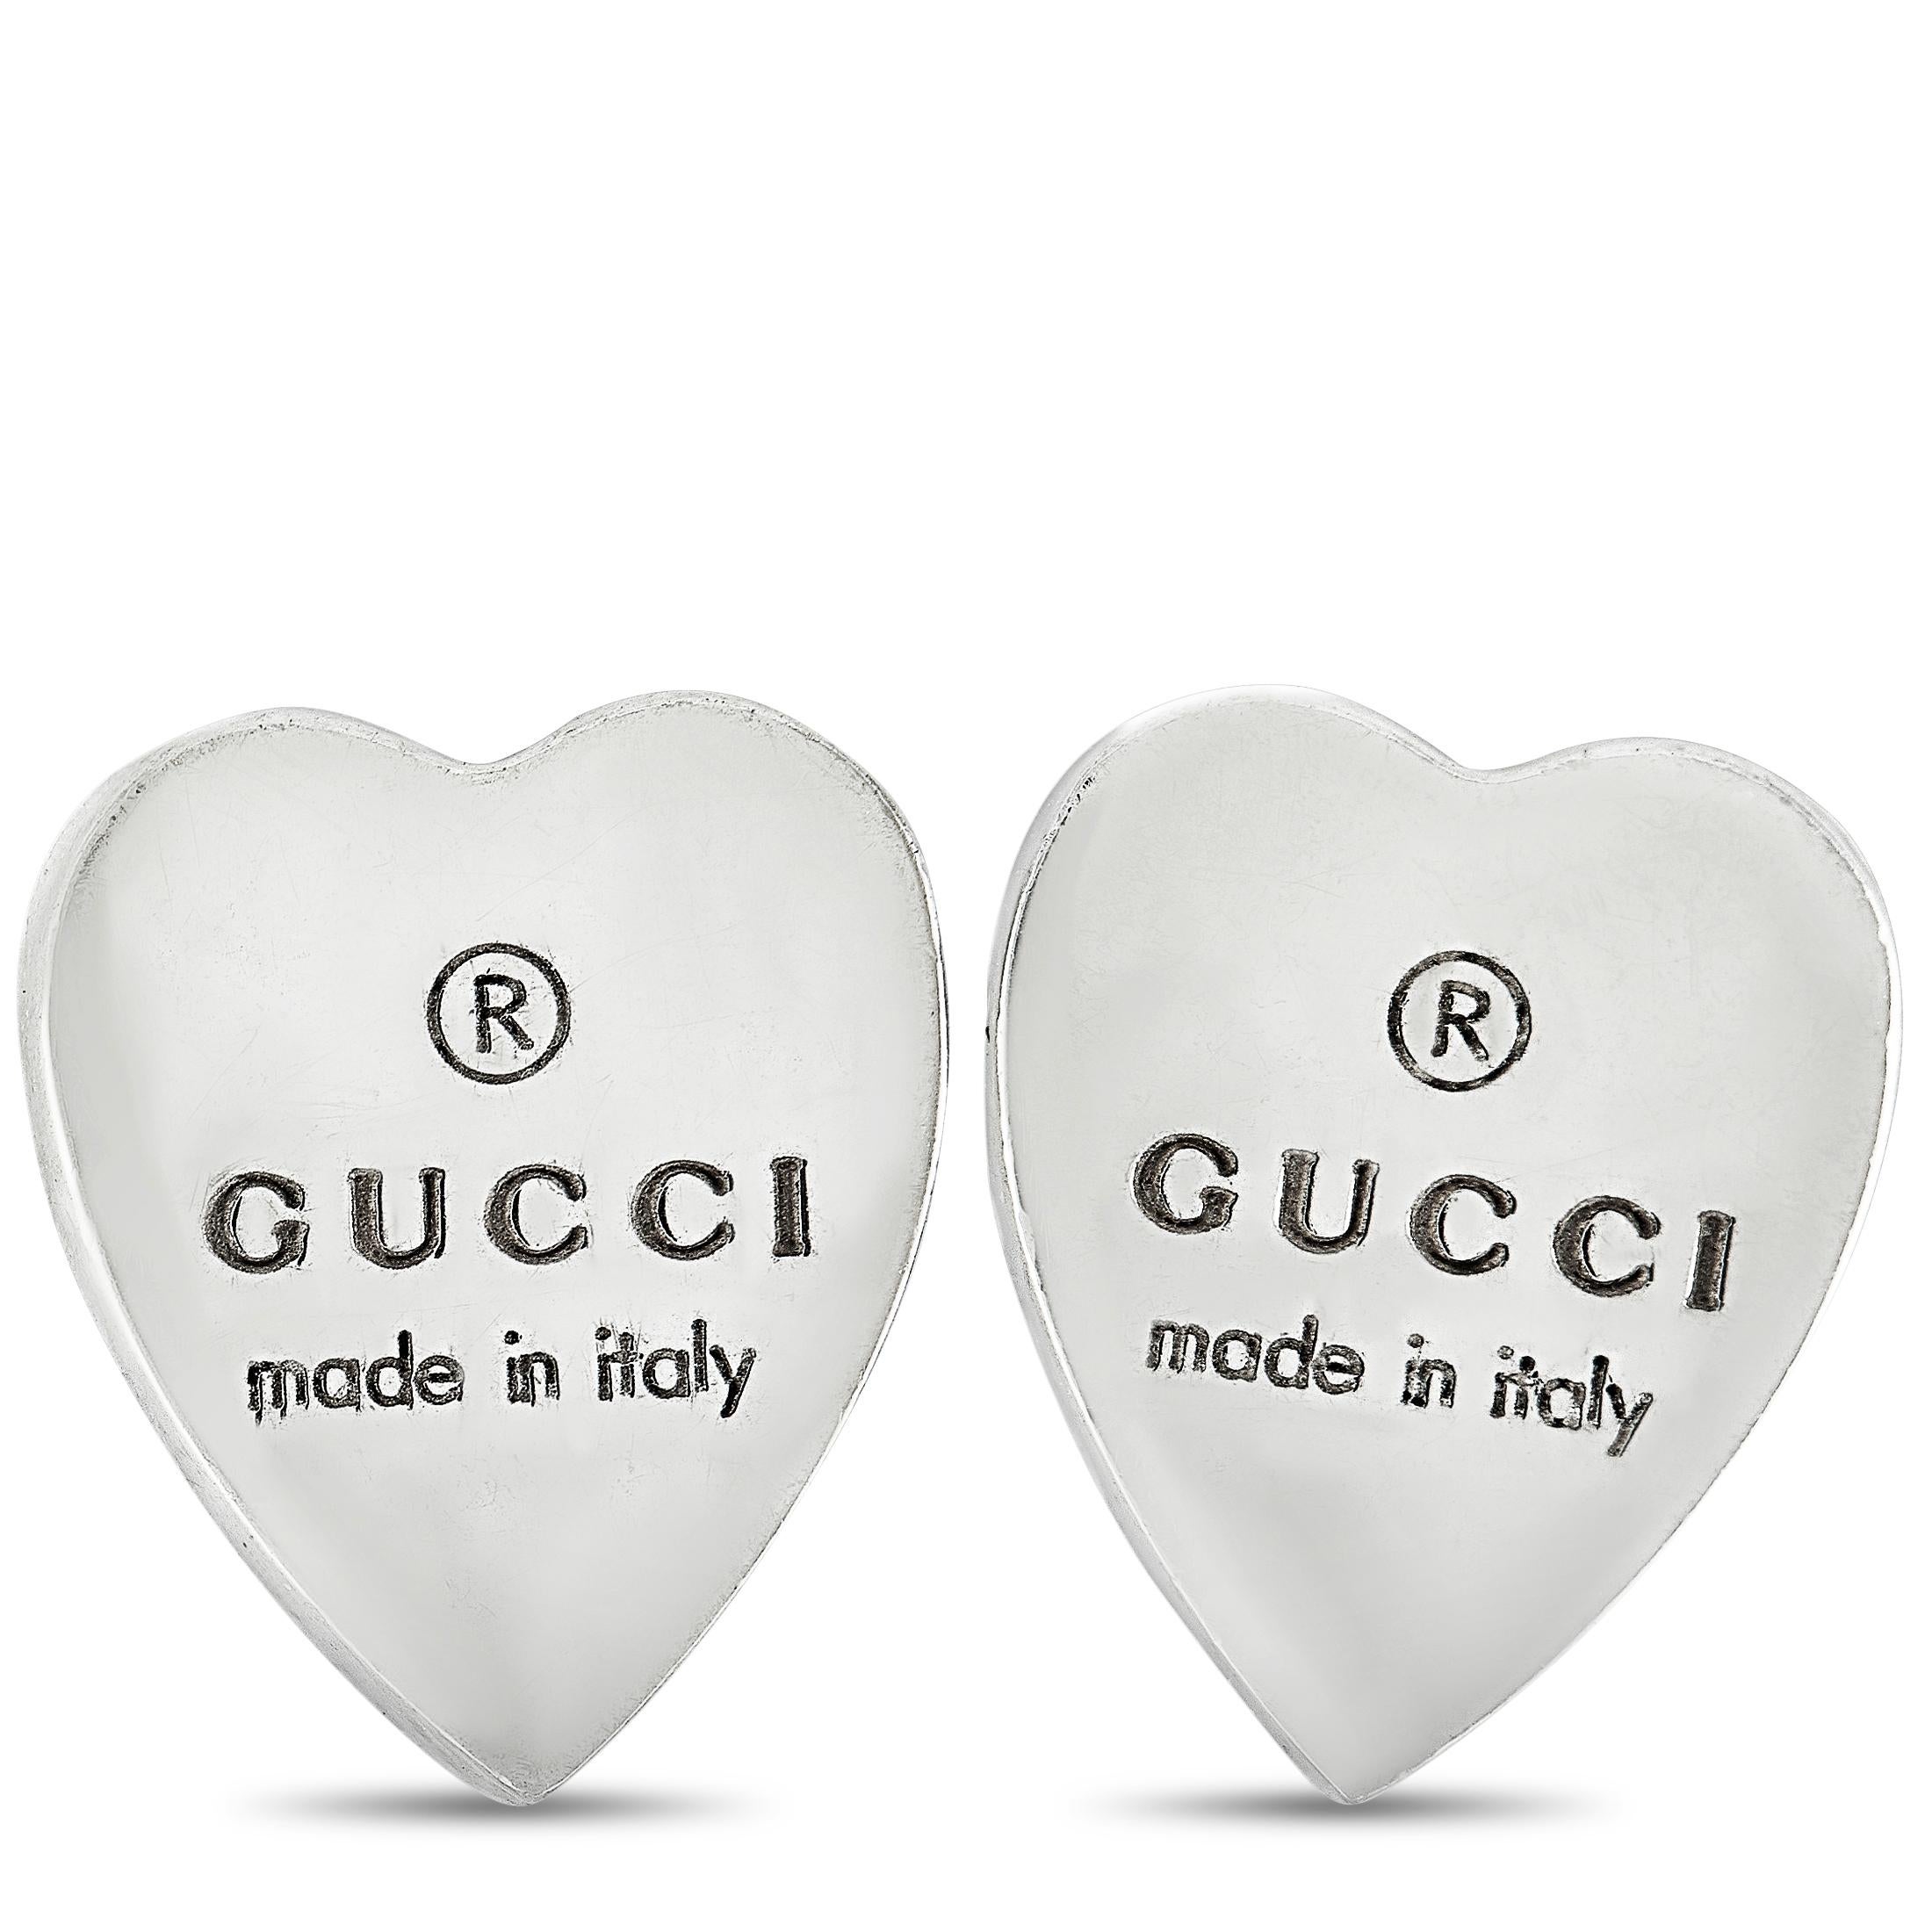 Gucci Heart Earrings - 2 For Sale on 1stDibs